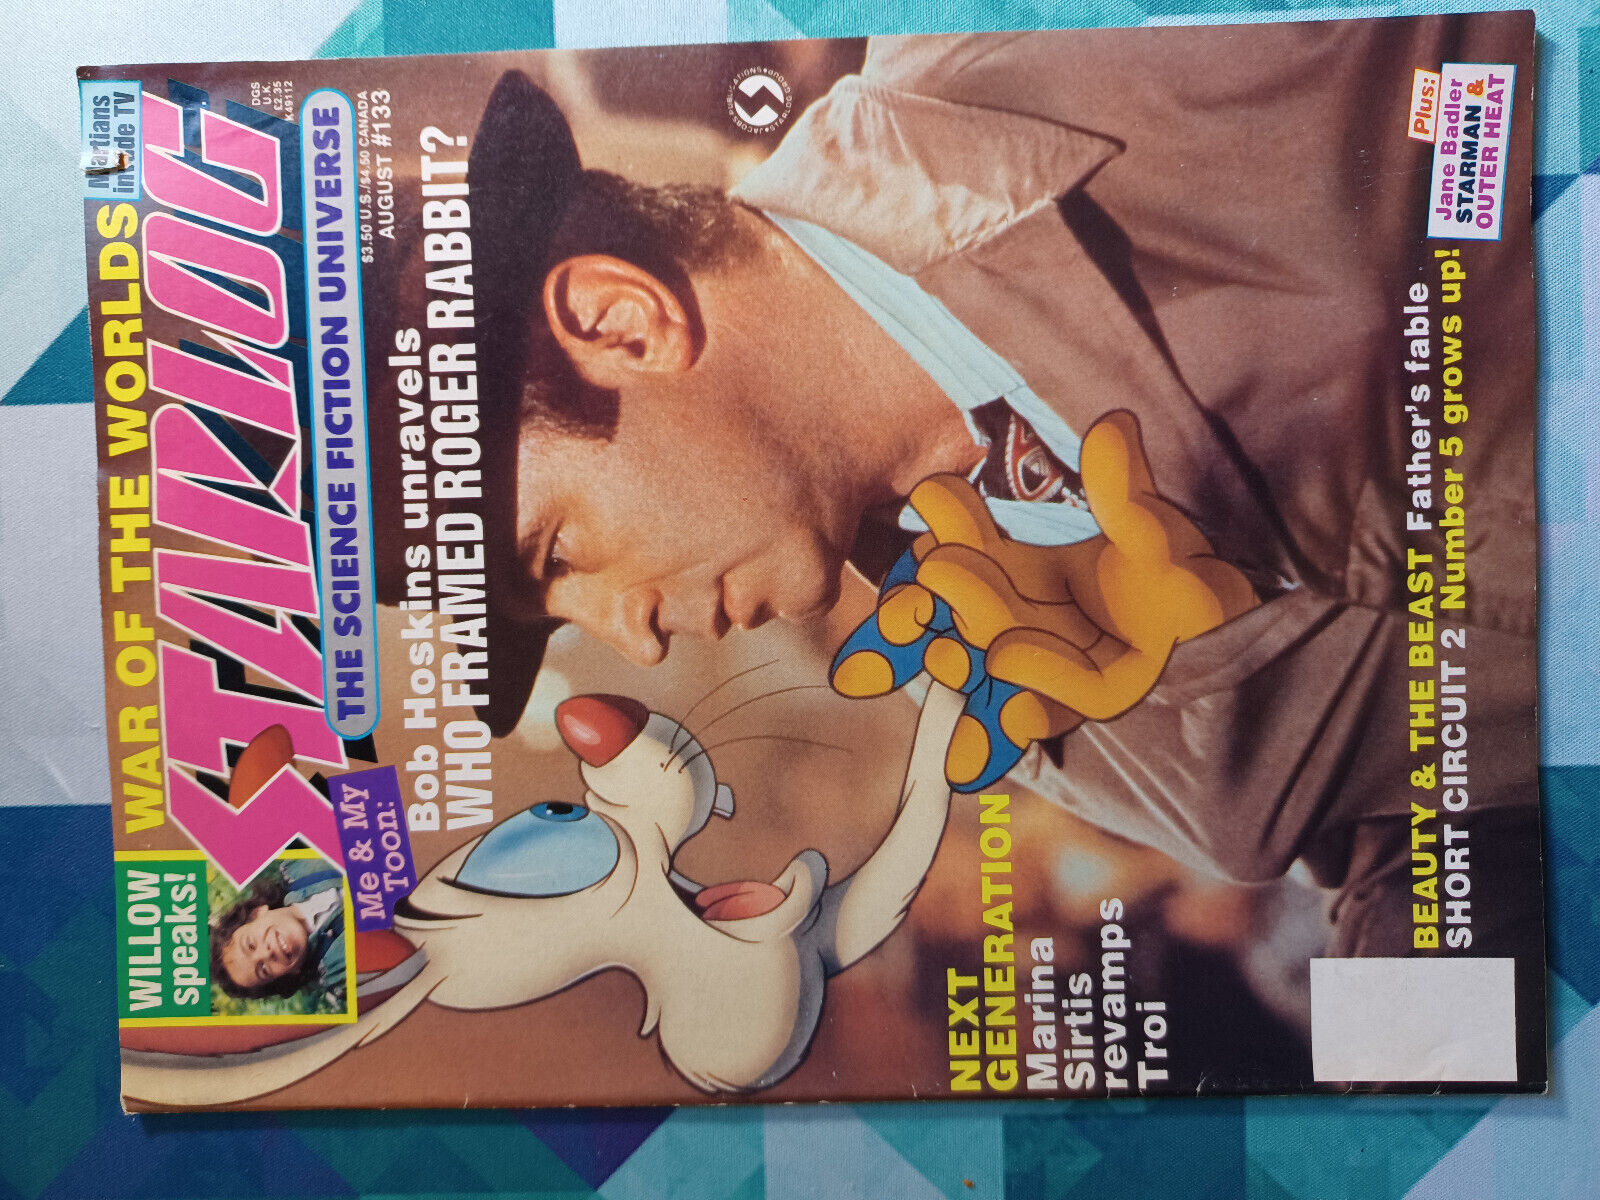 Starlog Magazine August 1988 #133 Roger Rabbit Cover Science Fiction Fantasy